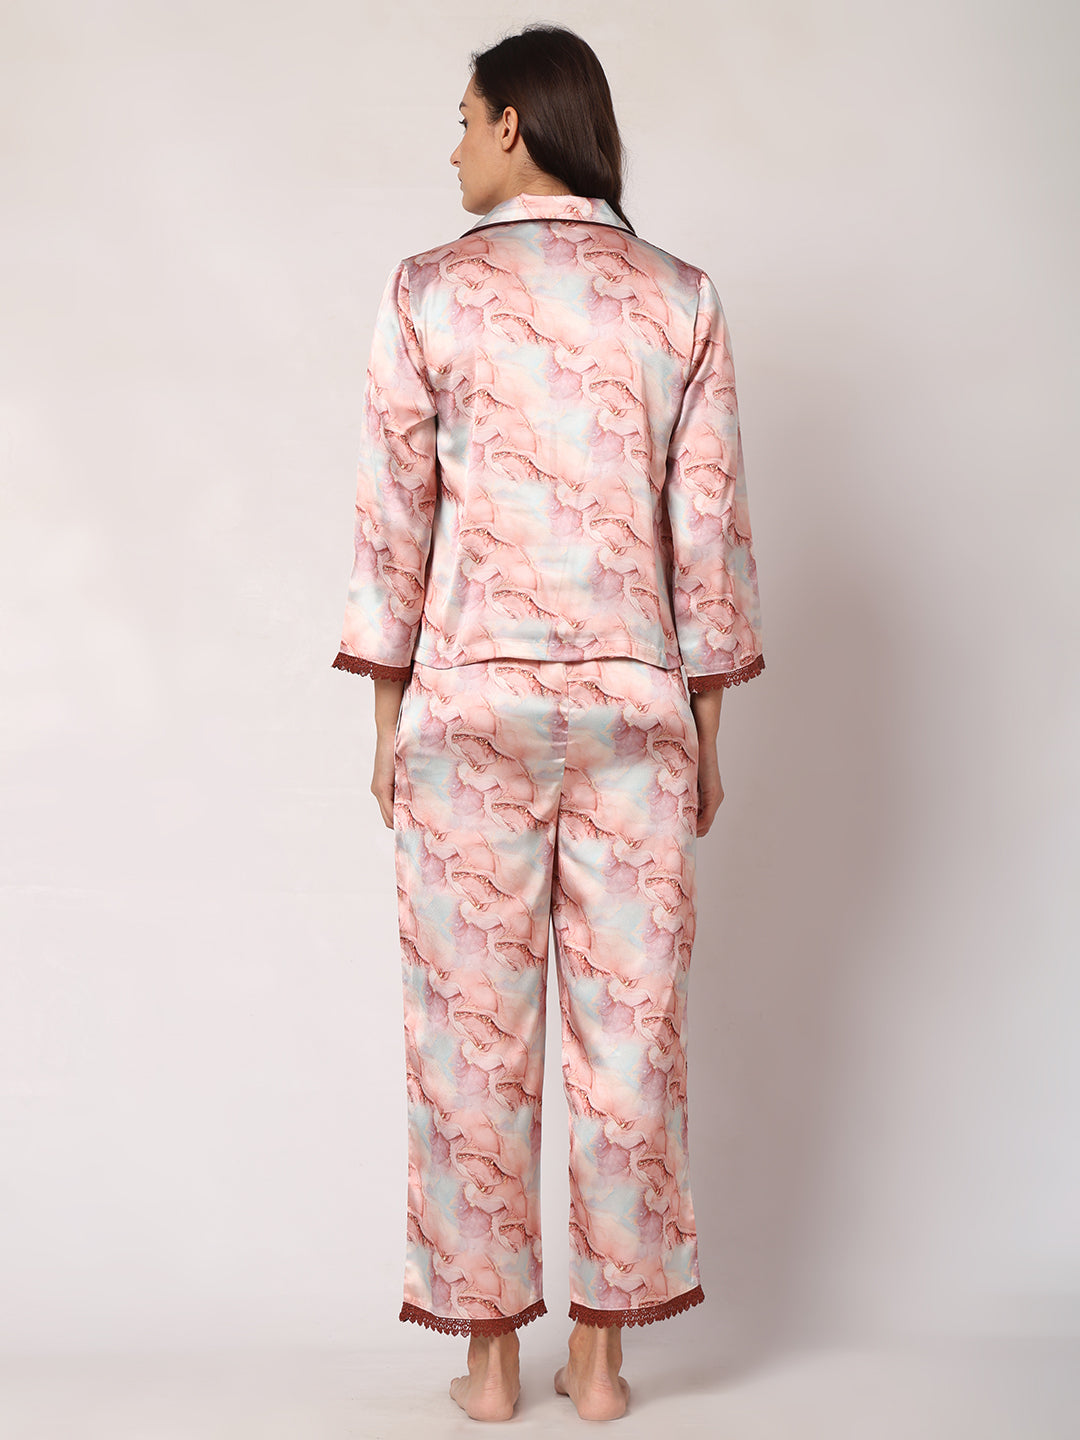 GOCHIKKO Women's Satin Printed Color Night Suit Set of Shirt & Pyjama Pack of 1(Purple Brown Printed)